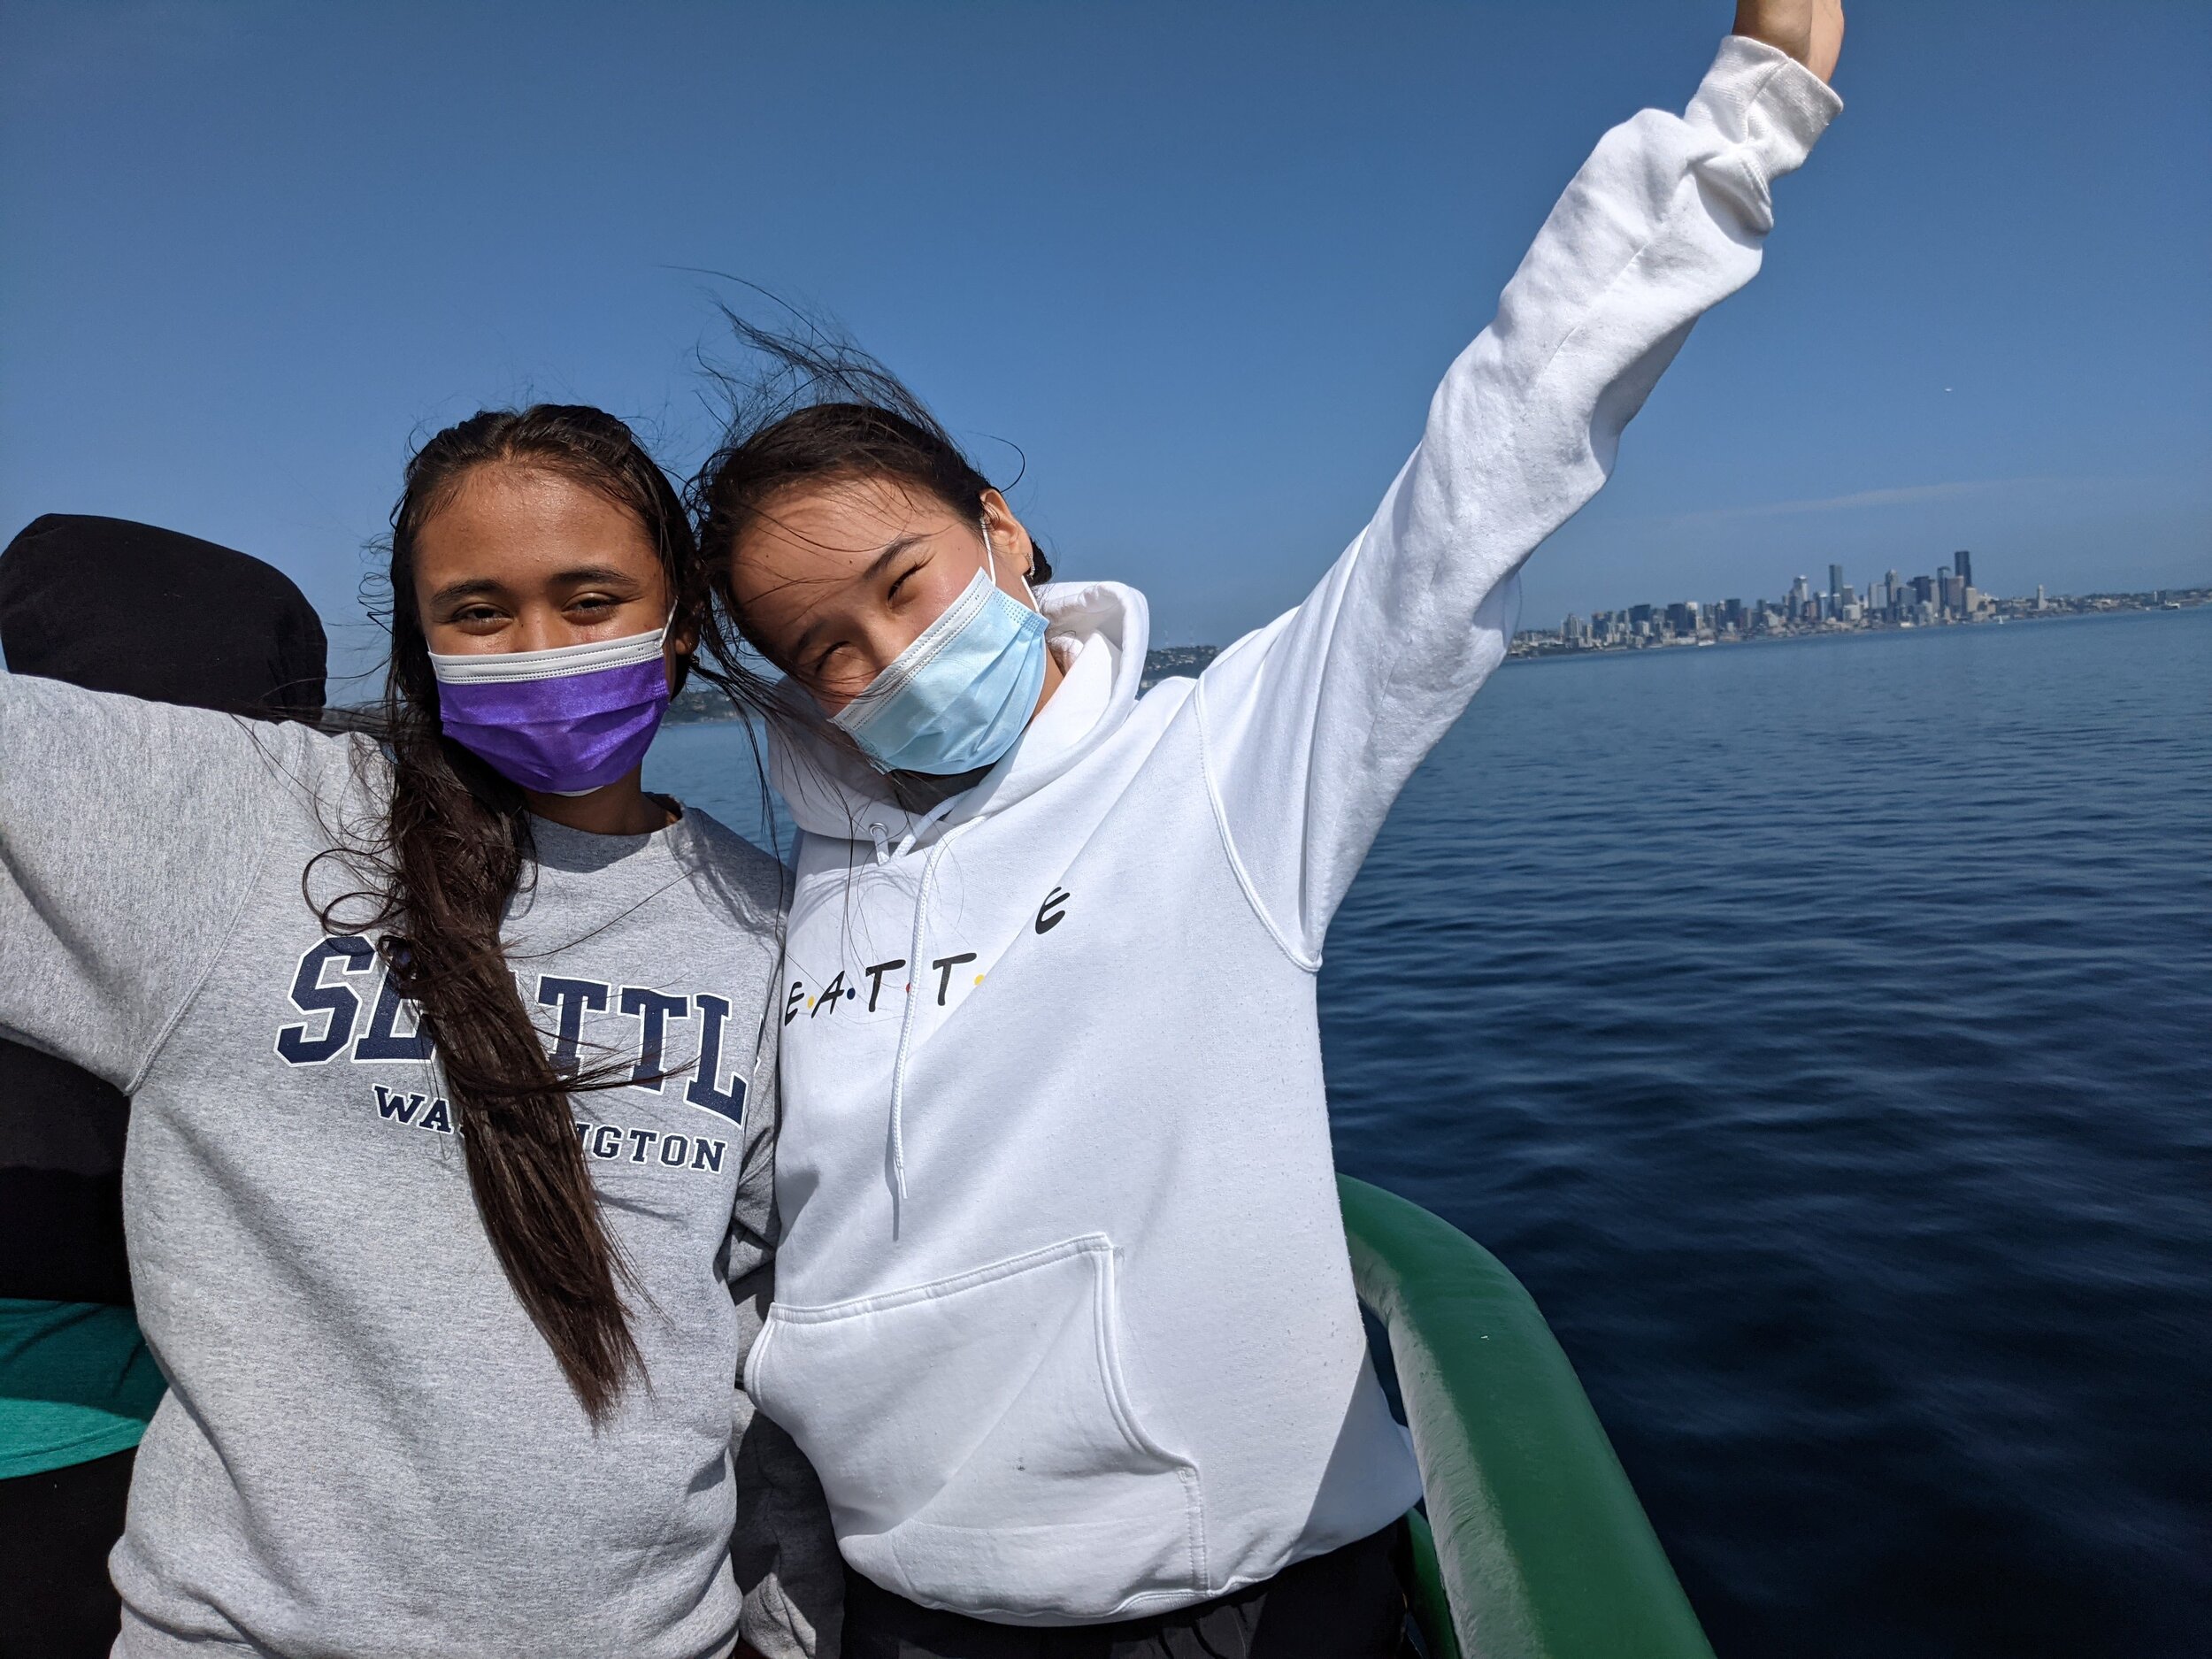 Munira and Aydana representing Seattle on the ferry back from Bainbridge!